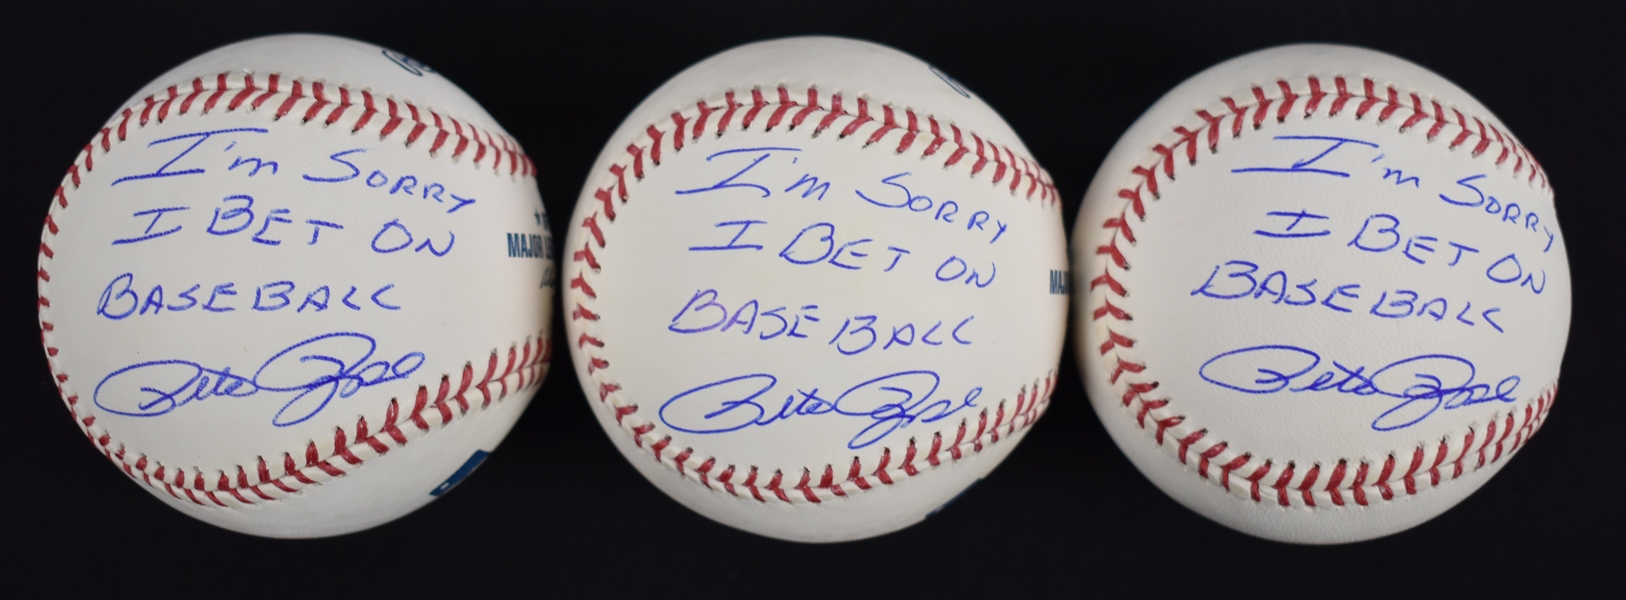 Pete Rose Lot of 3 Autographed "Im Sorry I Bet On Baseball" Inscribed Baseballs